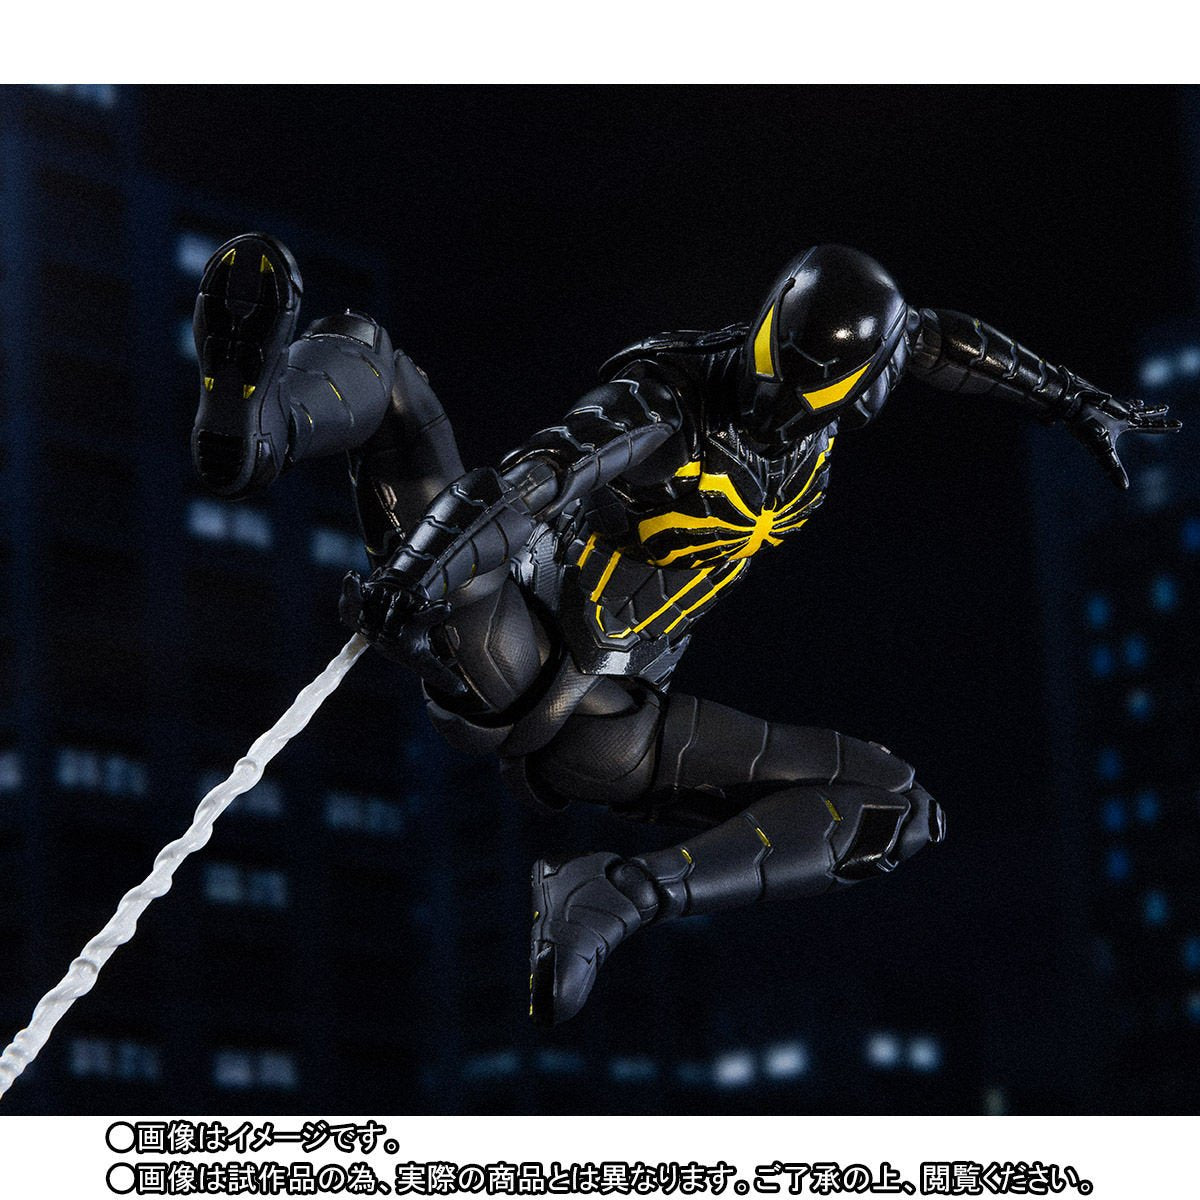 S.H. Figuarts Marvel Spiderman Anit-Ock Spider-Man Suit Tamashii Web Exclusive Action Figure 4